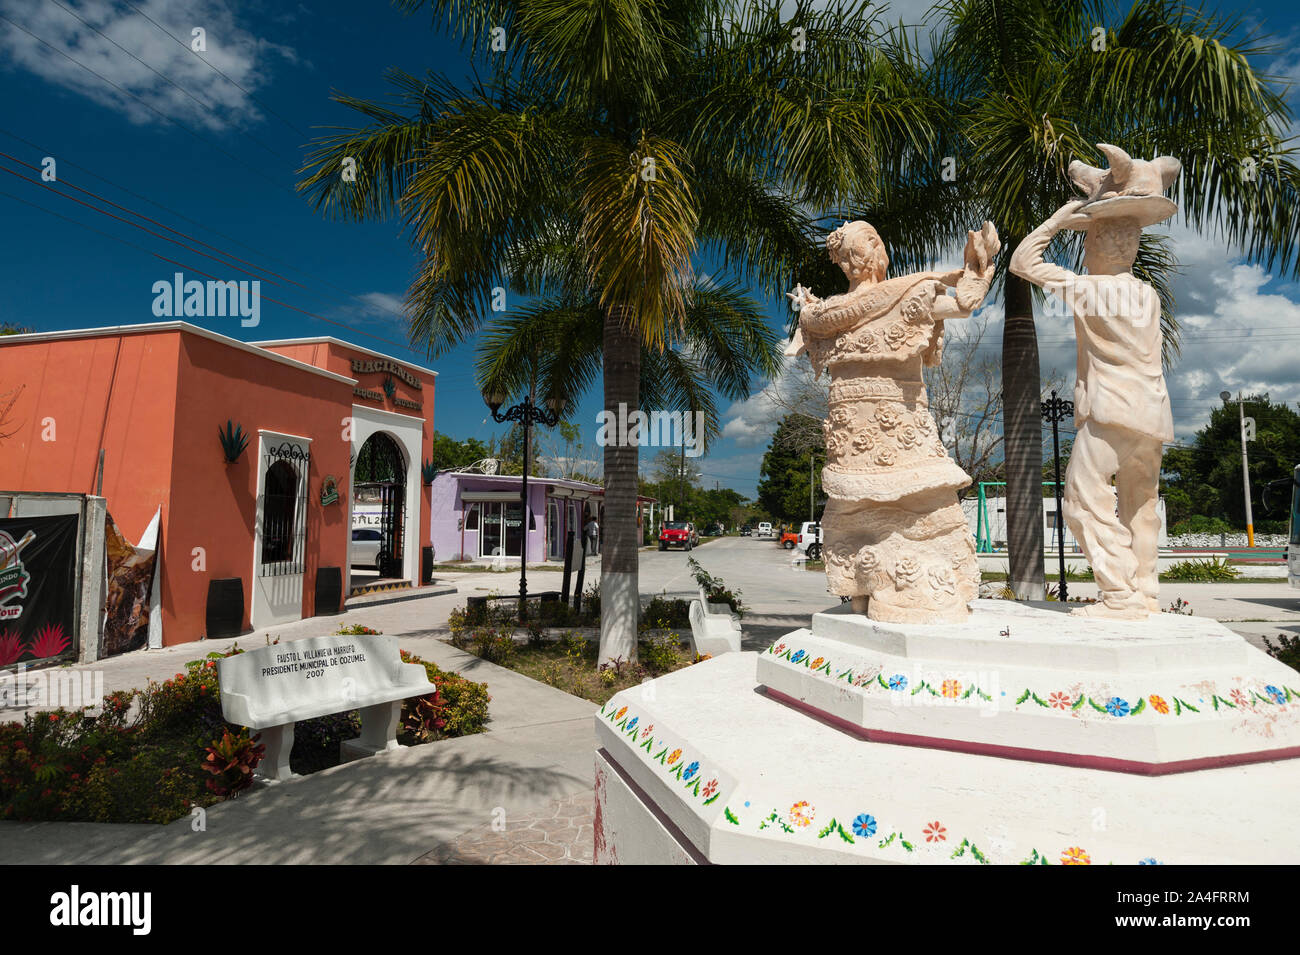 El Cedral, Cozumel island, Mexico Stock Photo - Alamy